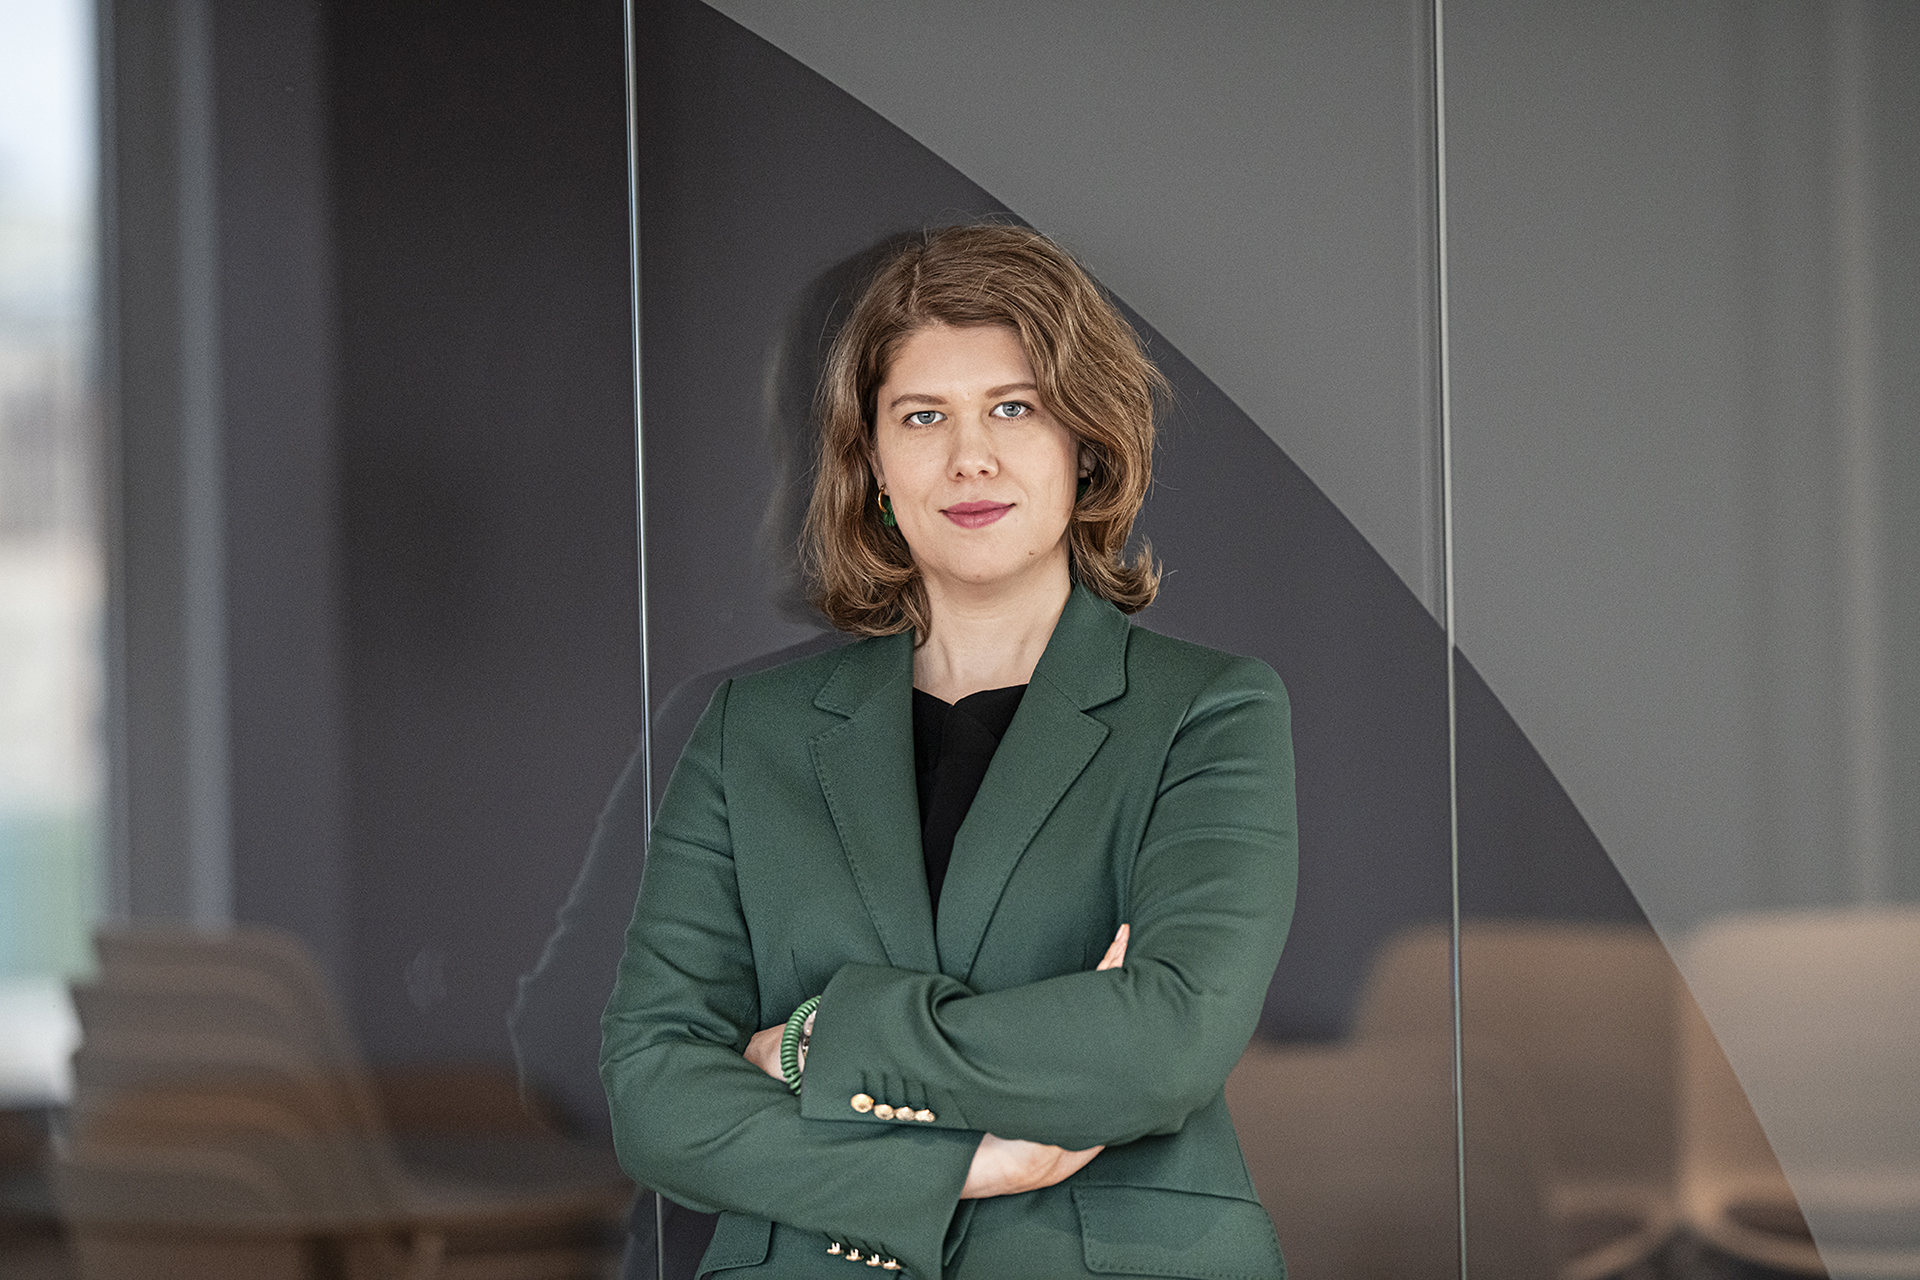 Anna Zabrodzka-Averianov, Senior Economist at Intrum